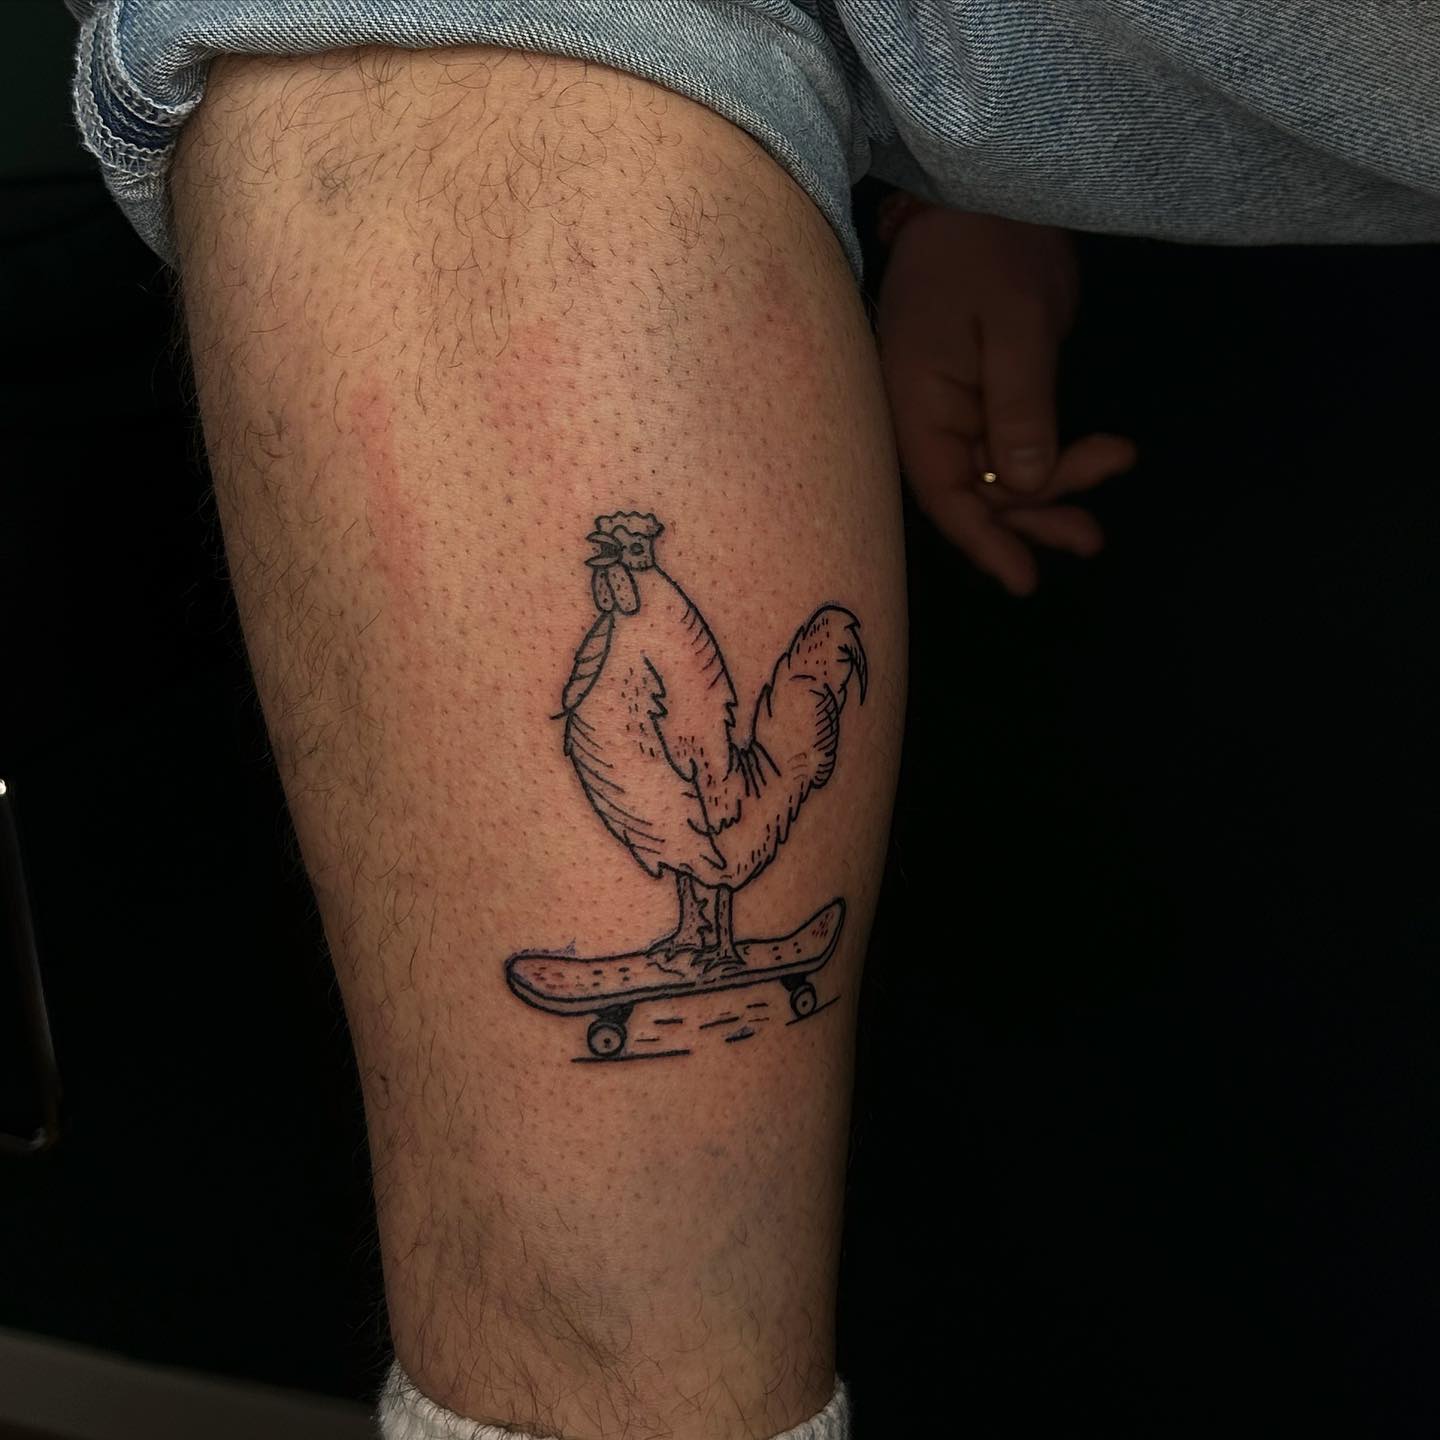 __
.
.
#tattoo #tattooideas #chicken #chickentattoo #tattooinspiration #tattoos